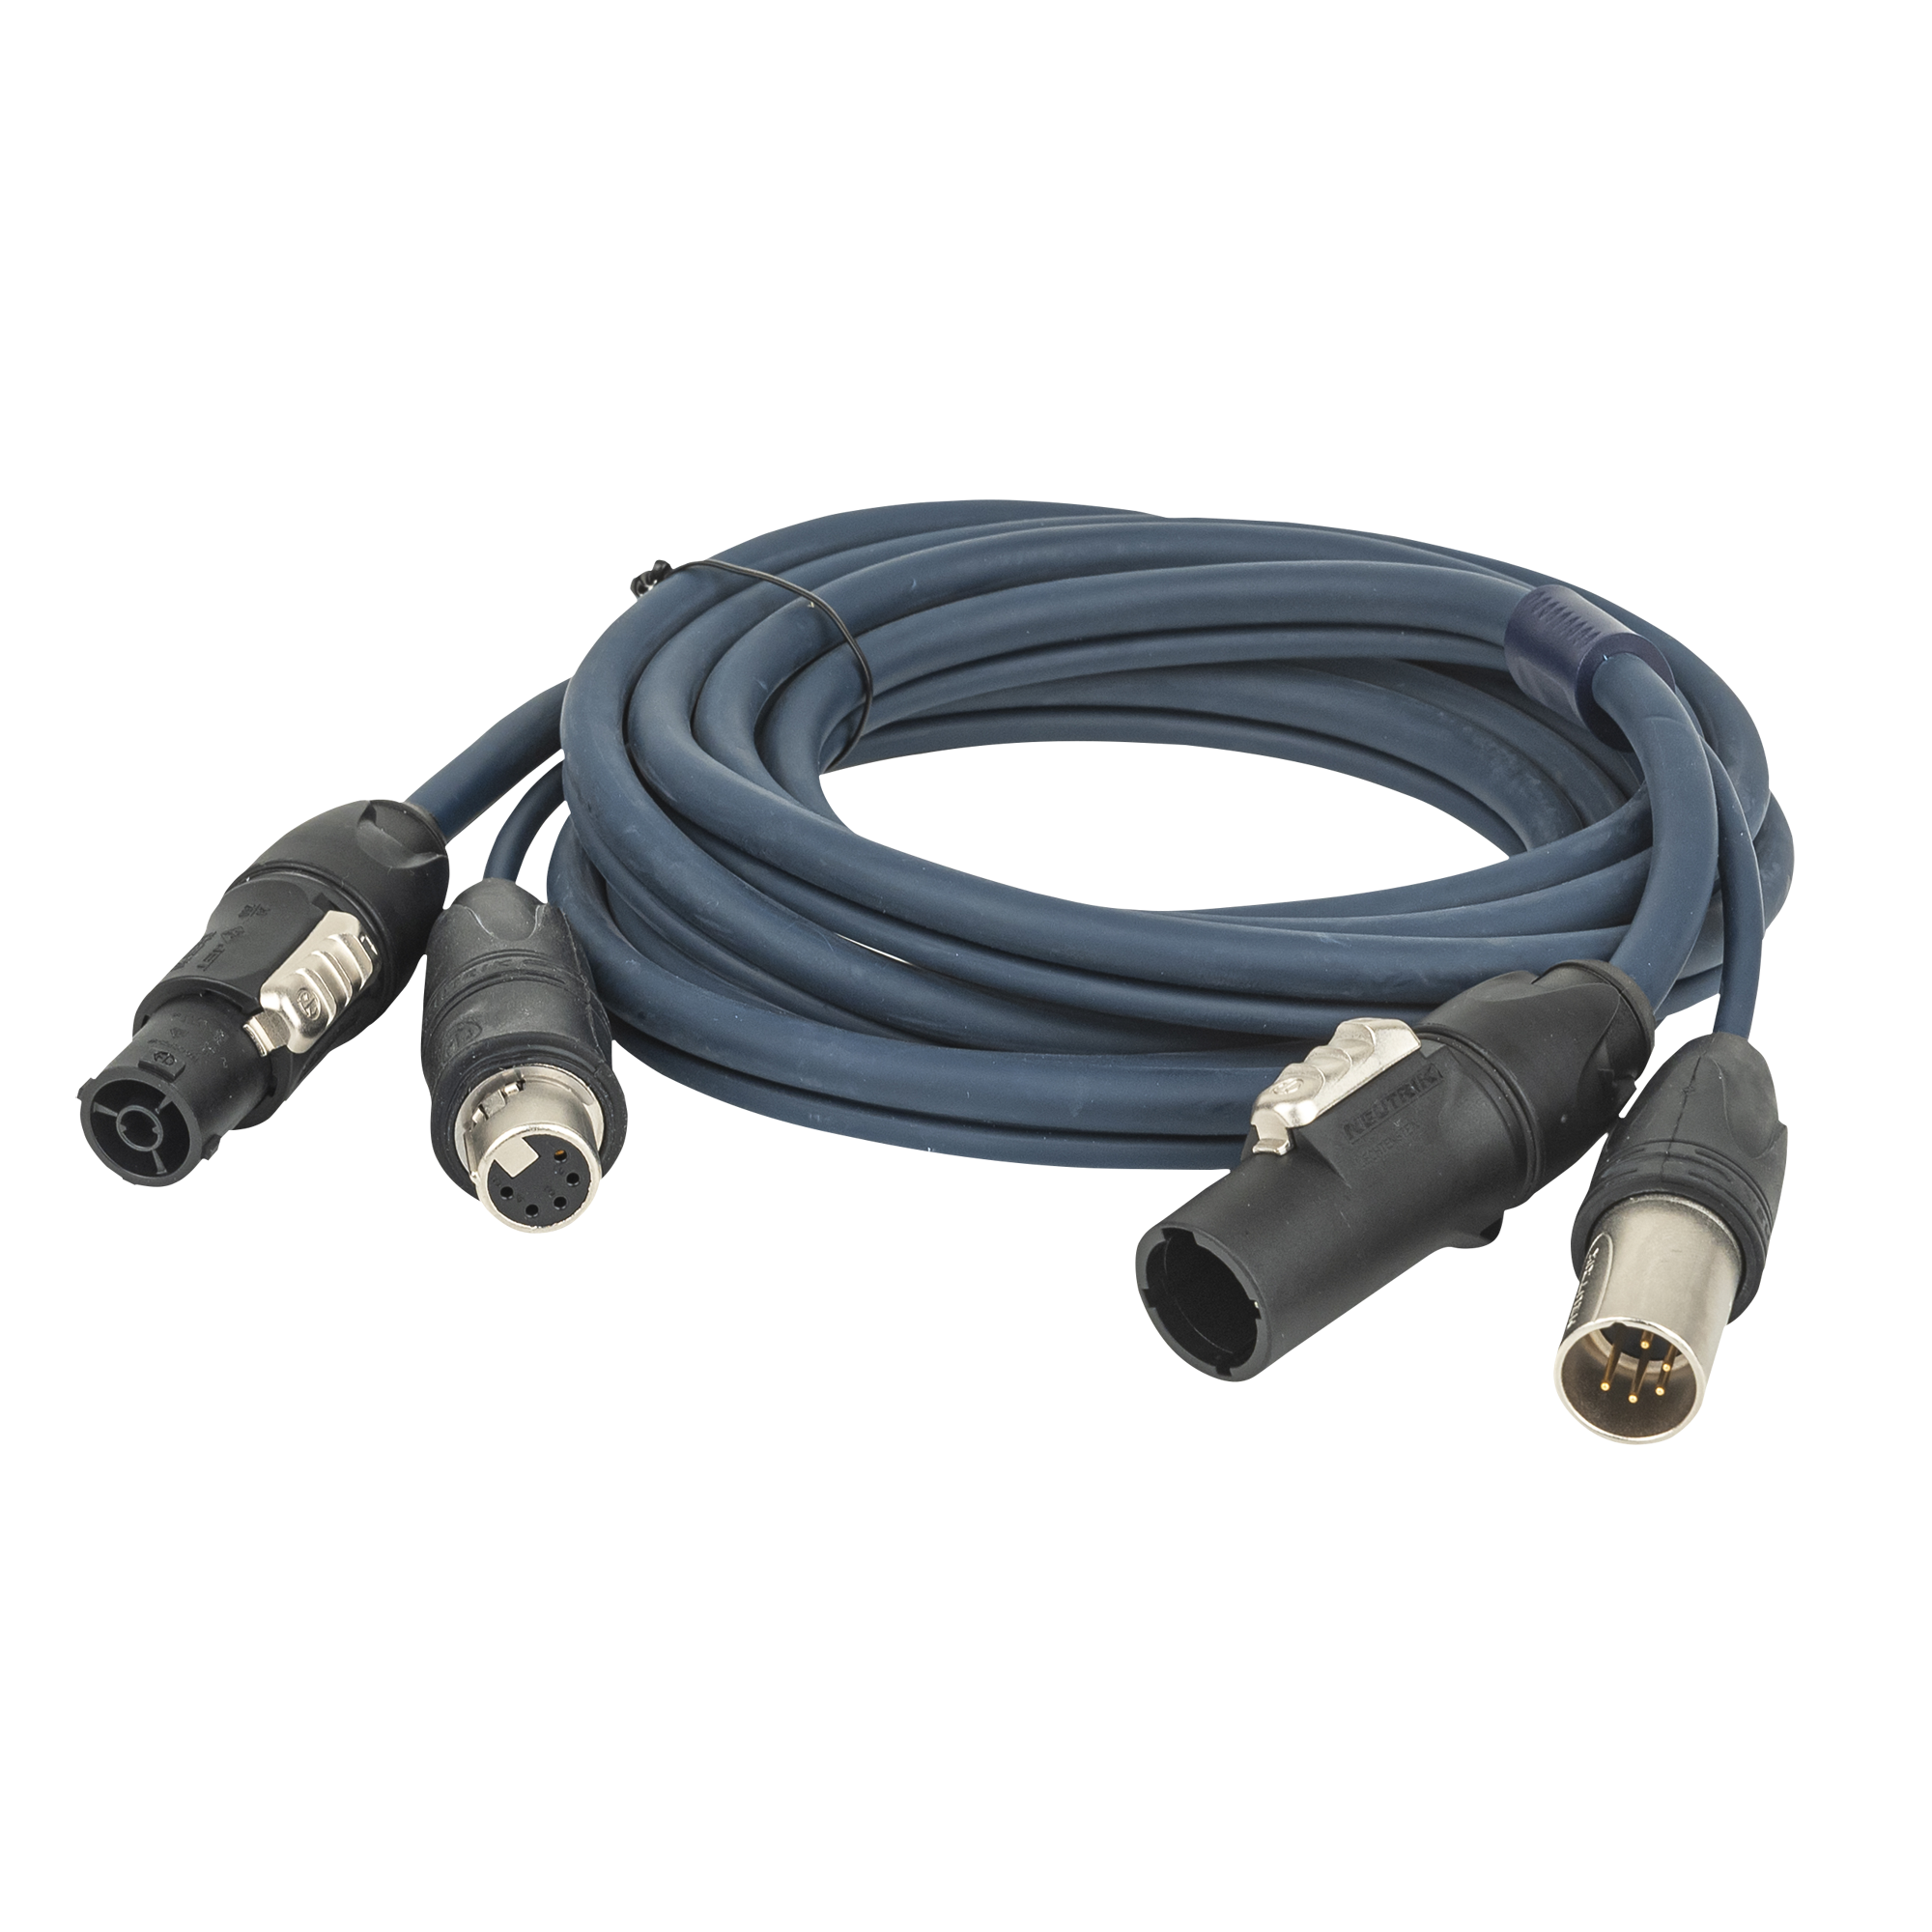 DAP FP-16 Hybrid Cable - powerCON TRUE1 & 5-pin XLR IP - DMX / Power DMX & Strom - 10 m